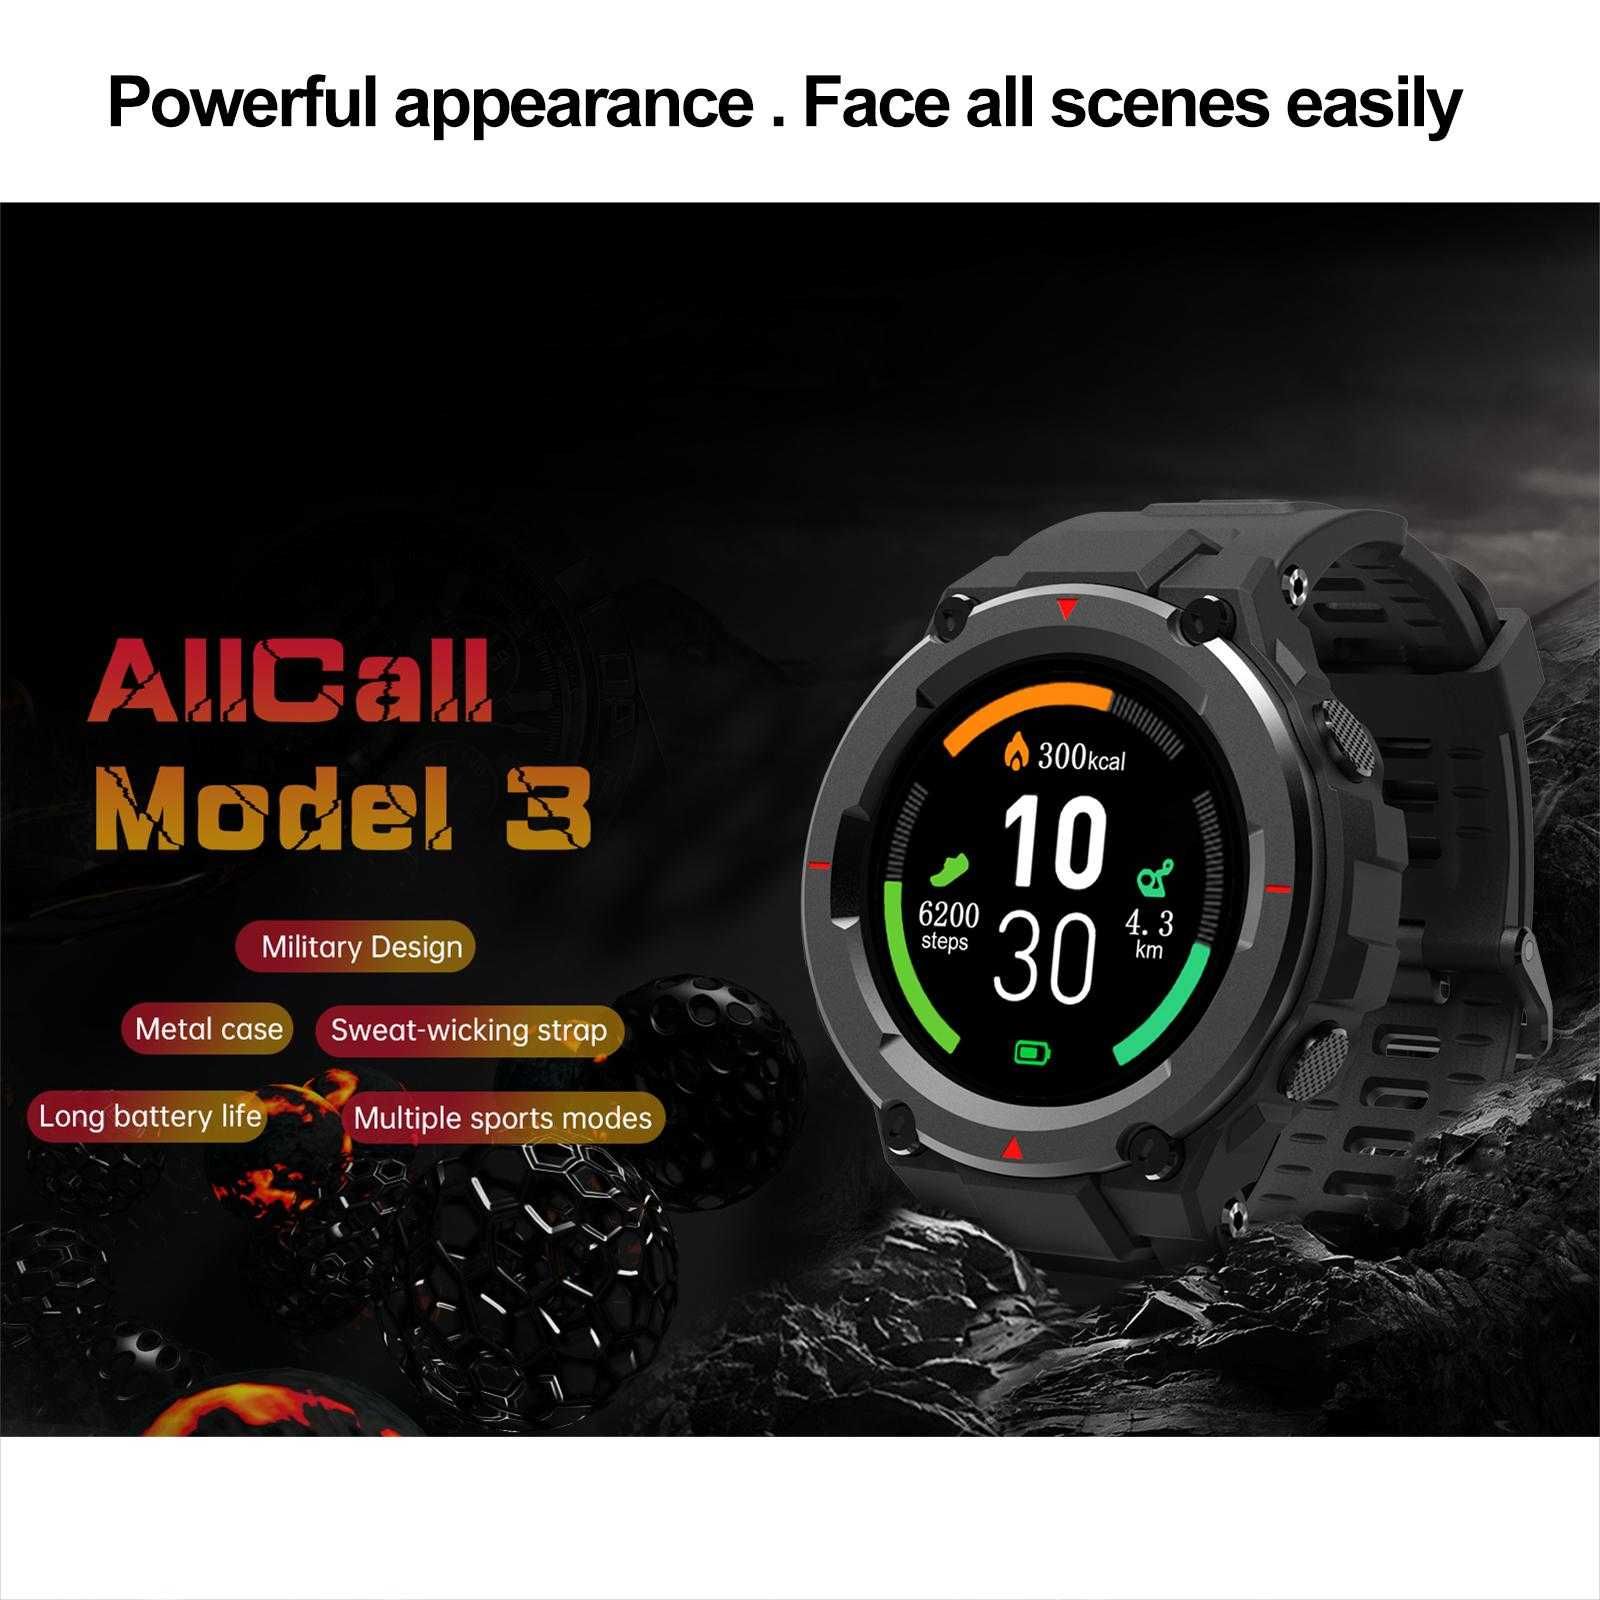 SmartWatch AllCall Model 3 tętno ciśnienie kroki dystans kalorie PL.